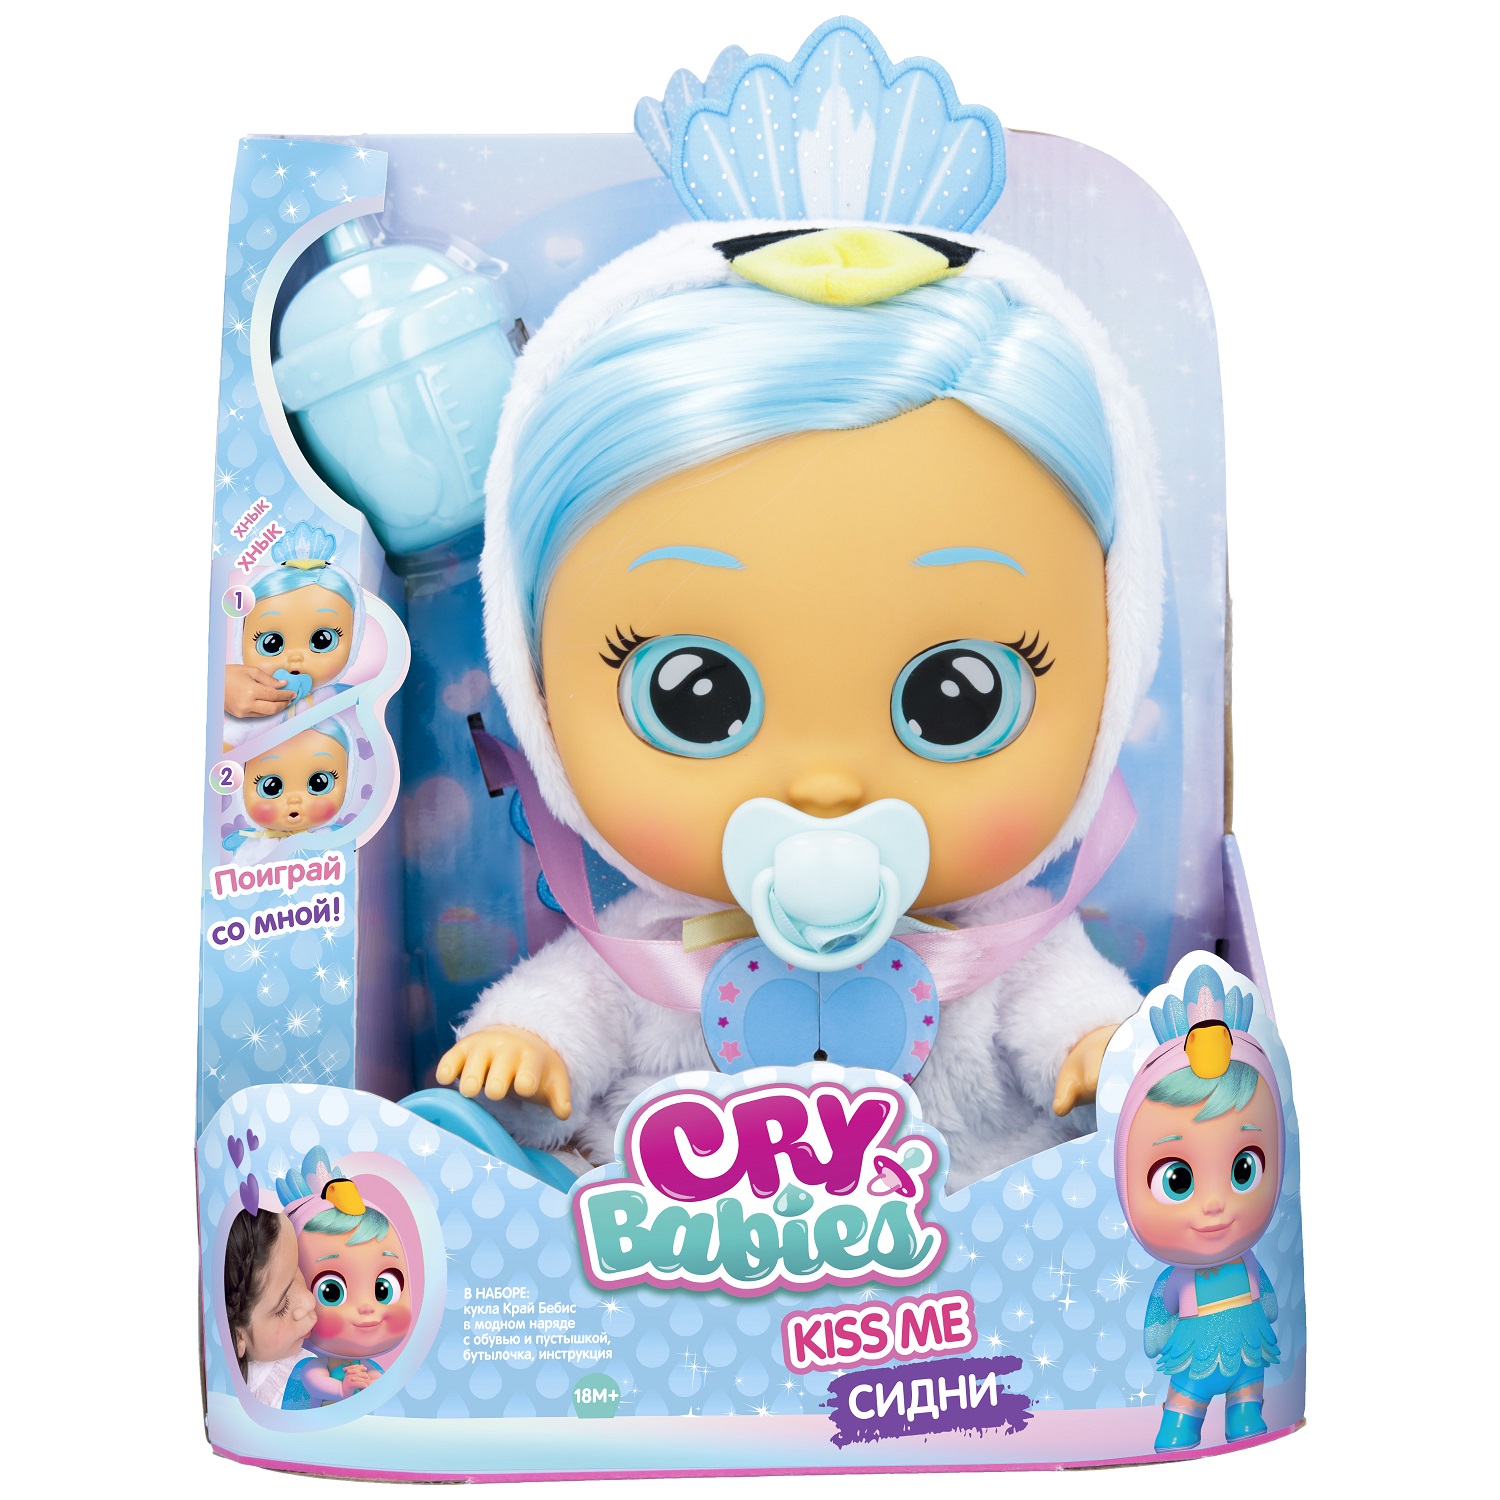 Край бебис новый. Пупс IMC Toys Cry Babies. 41032 Край Бебис кукла леди малышка плачущая Cry Babies. Кукла ББФ Cry Babies. Кукла Cry Baby d3328.